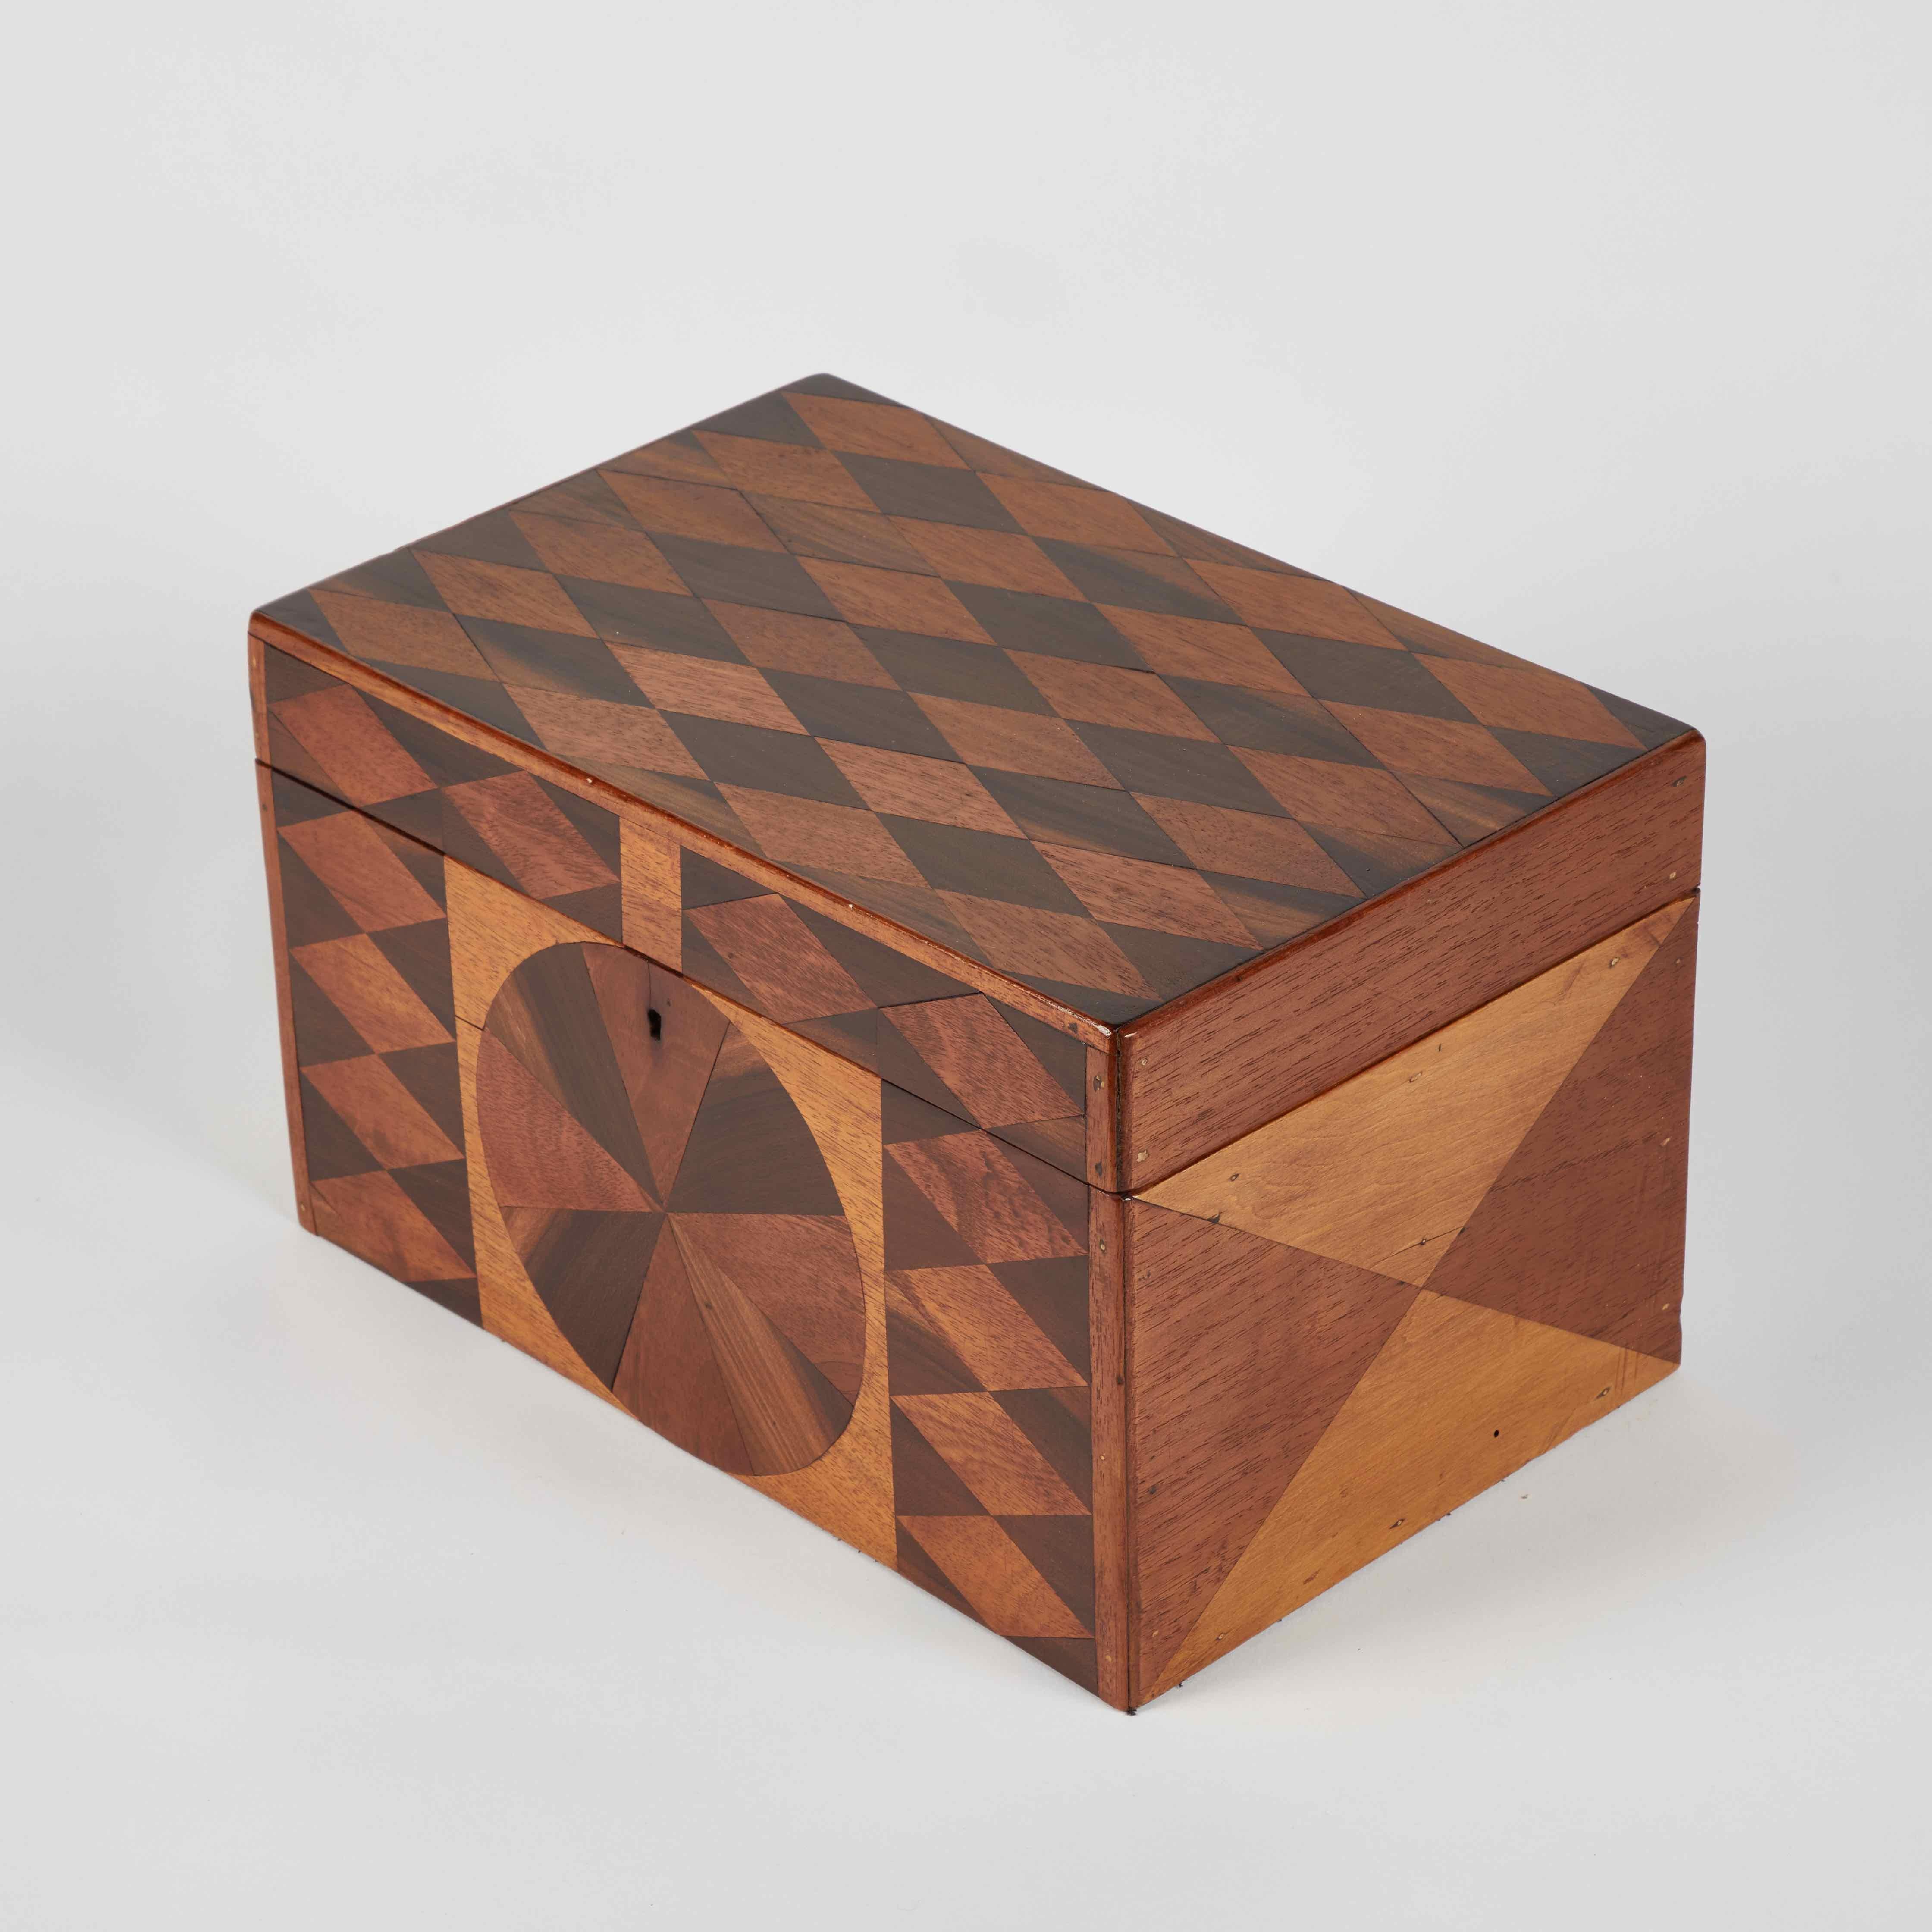 Parquetry box in boxwood and mahogany.